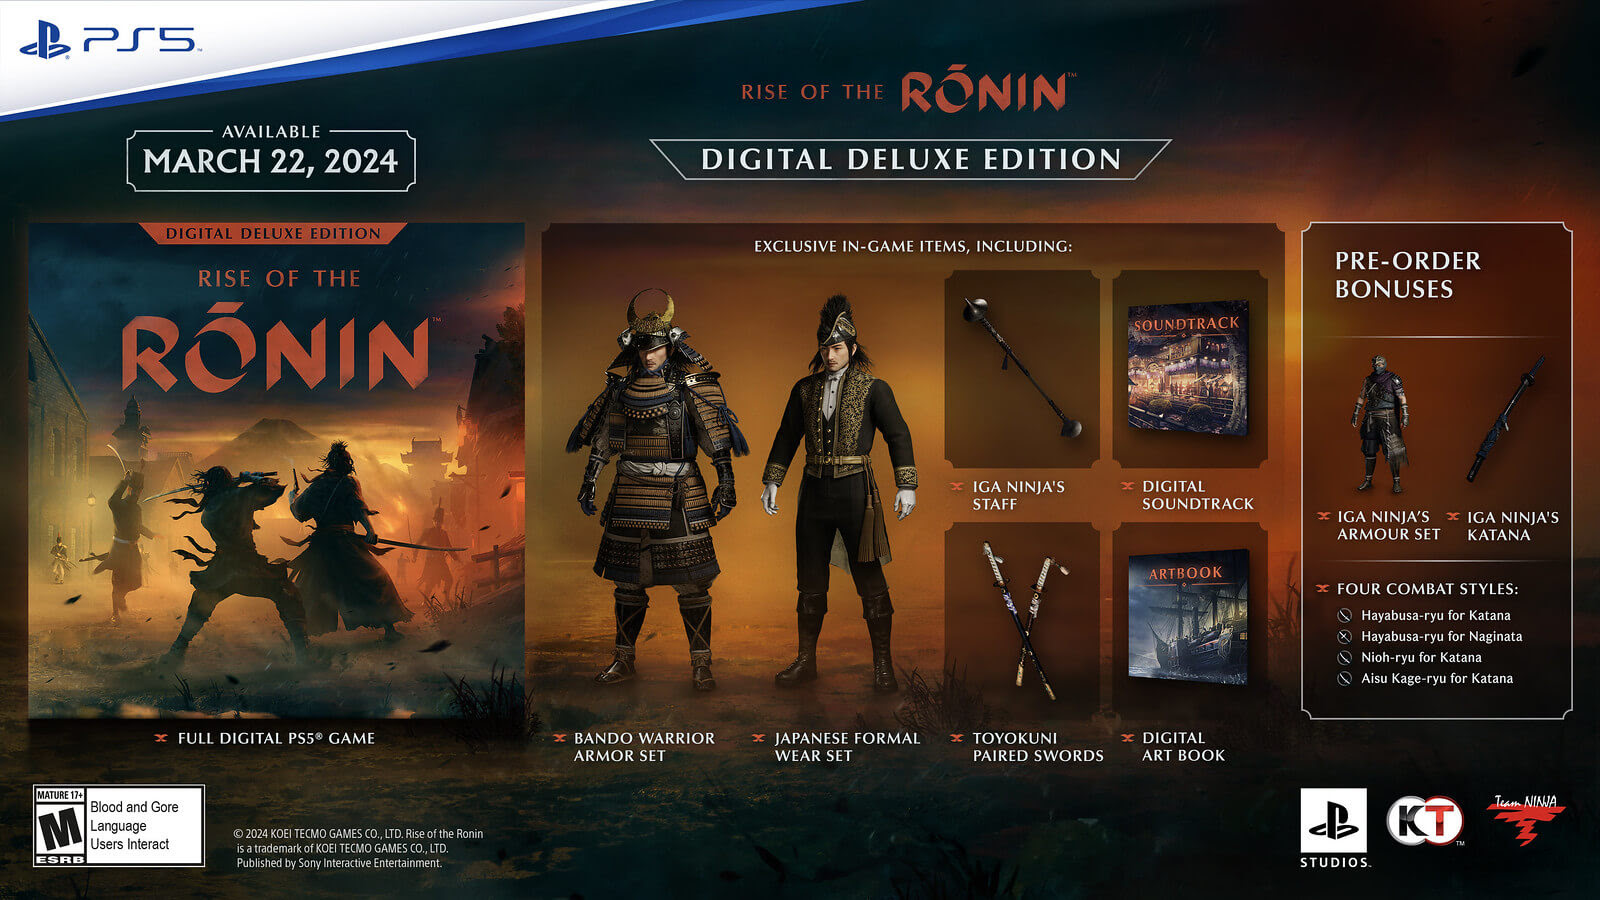 Reserva ya Rise of the Ronin para PS5 en GAME y llévate este DLC exclusivo  de regalo - Vandal